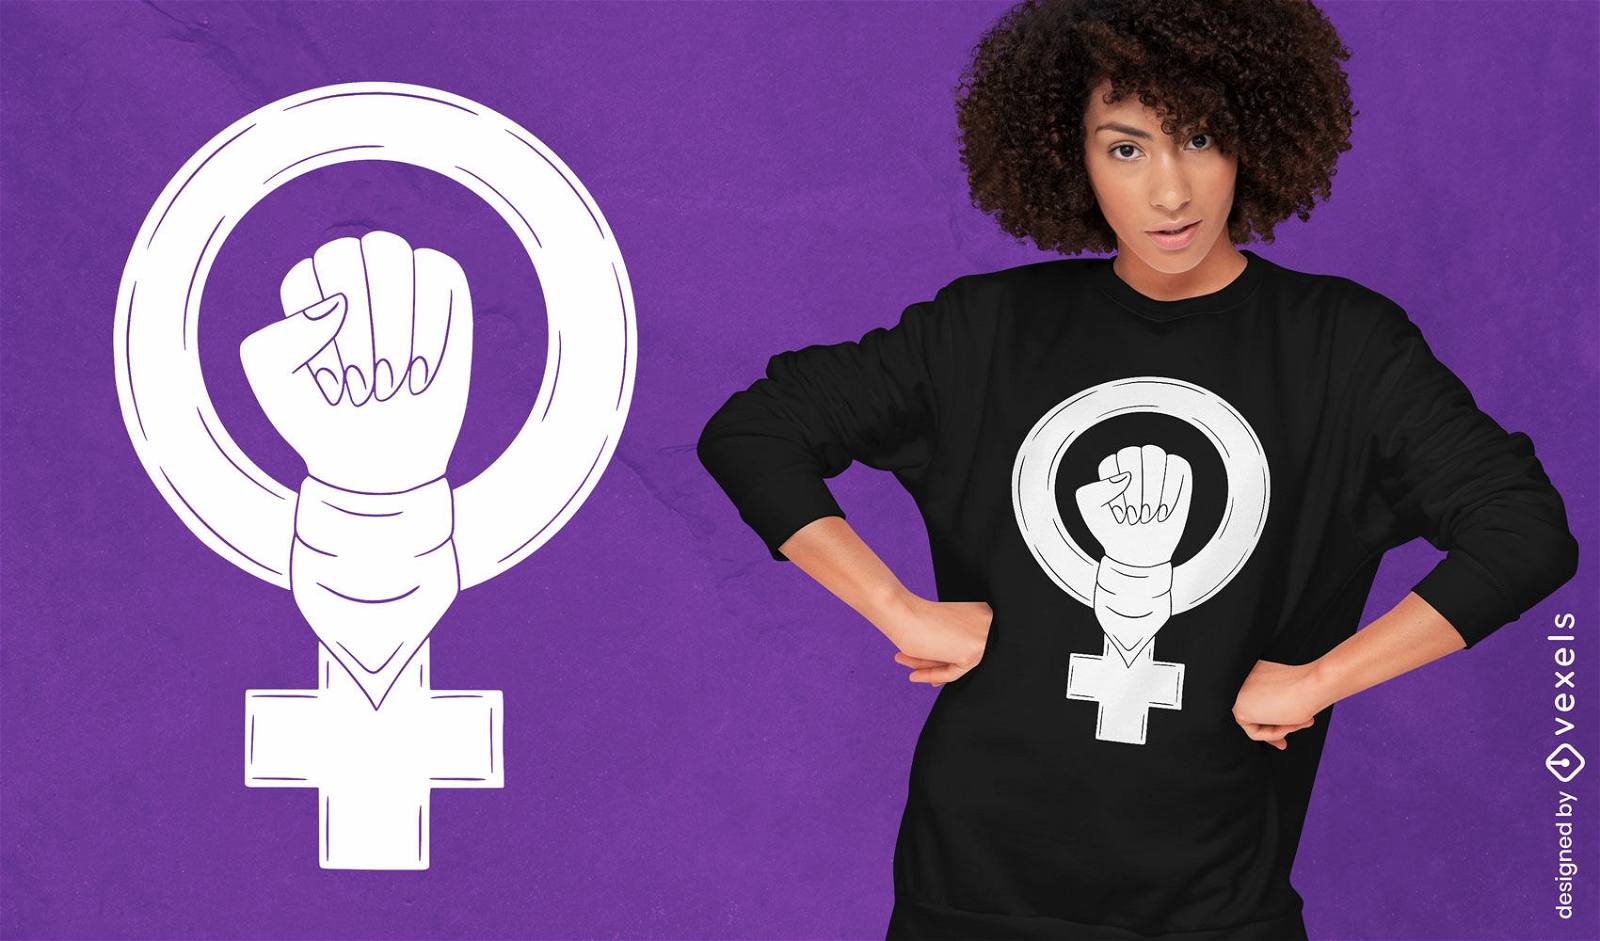 Dise?o de camiseta de s?mbolo feminista.